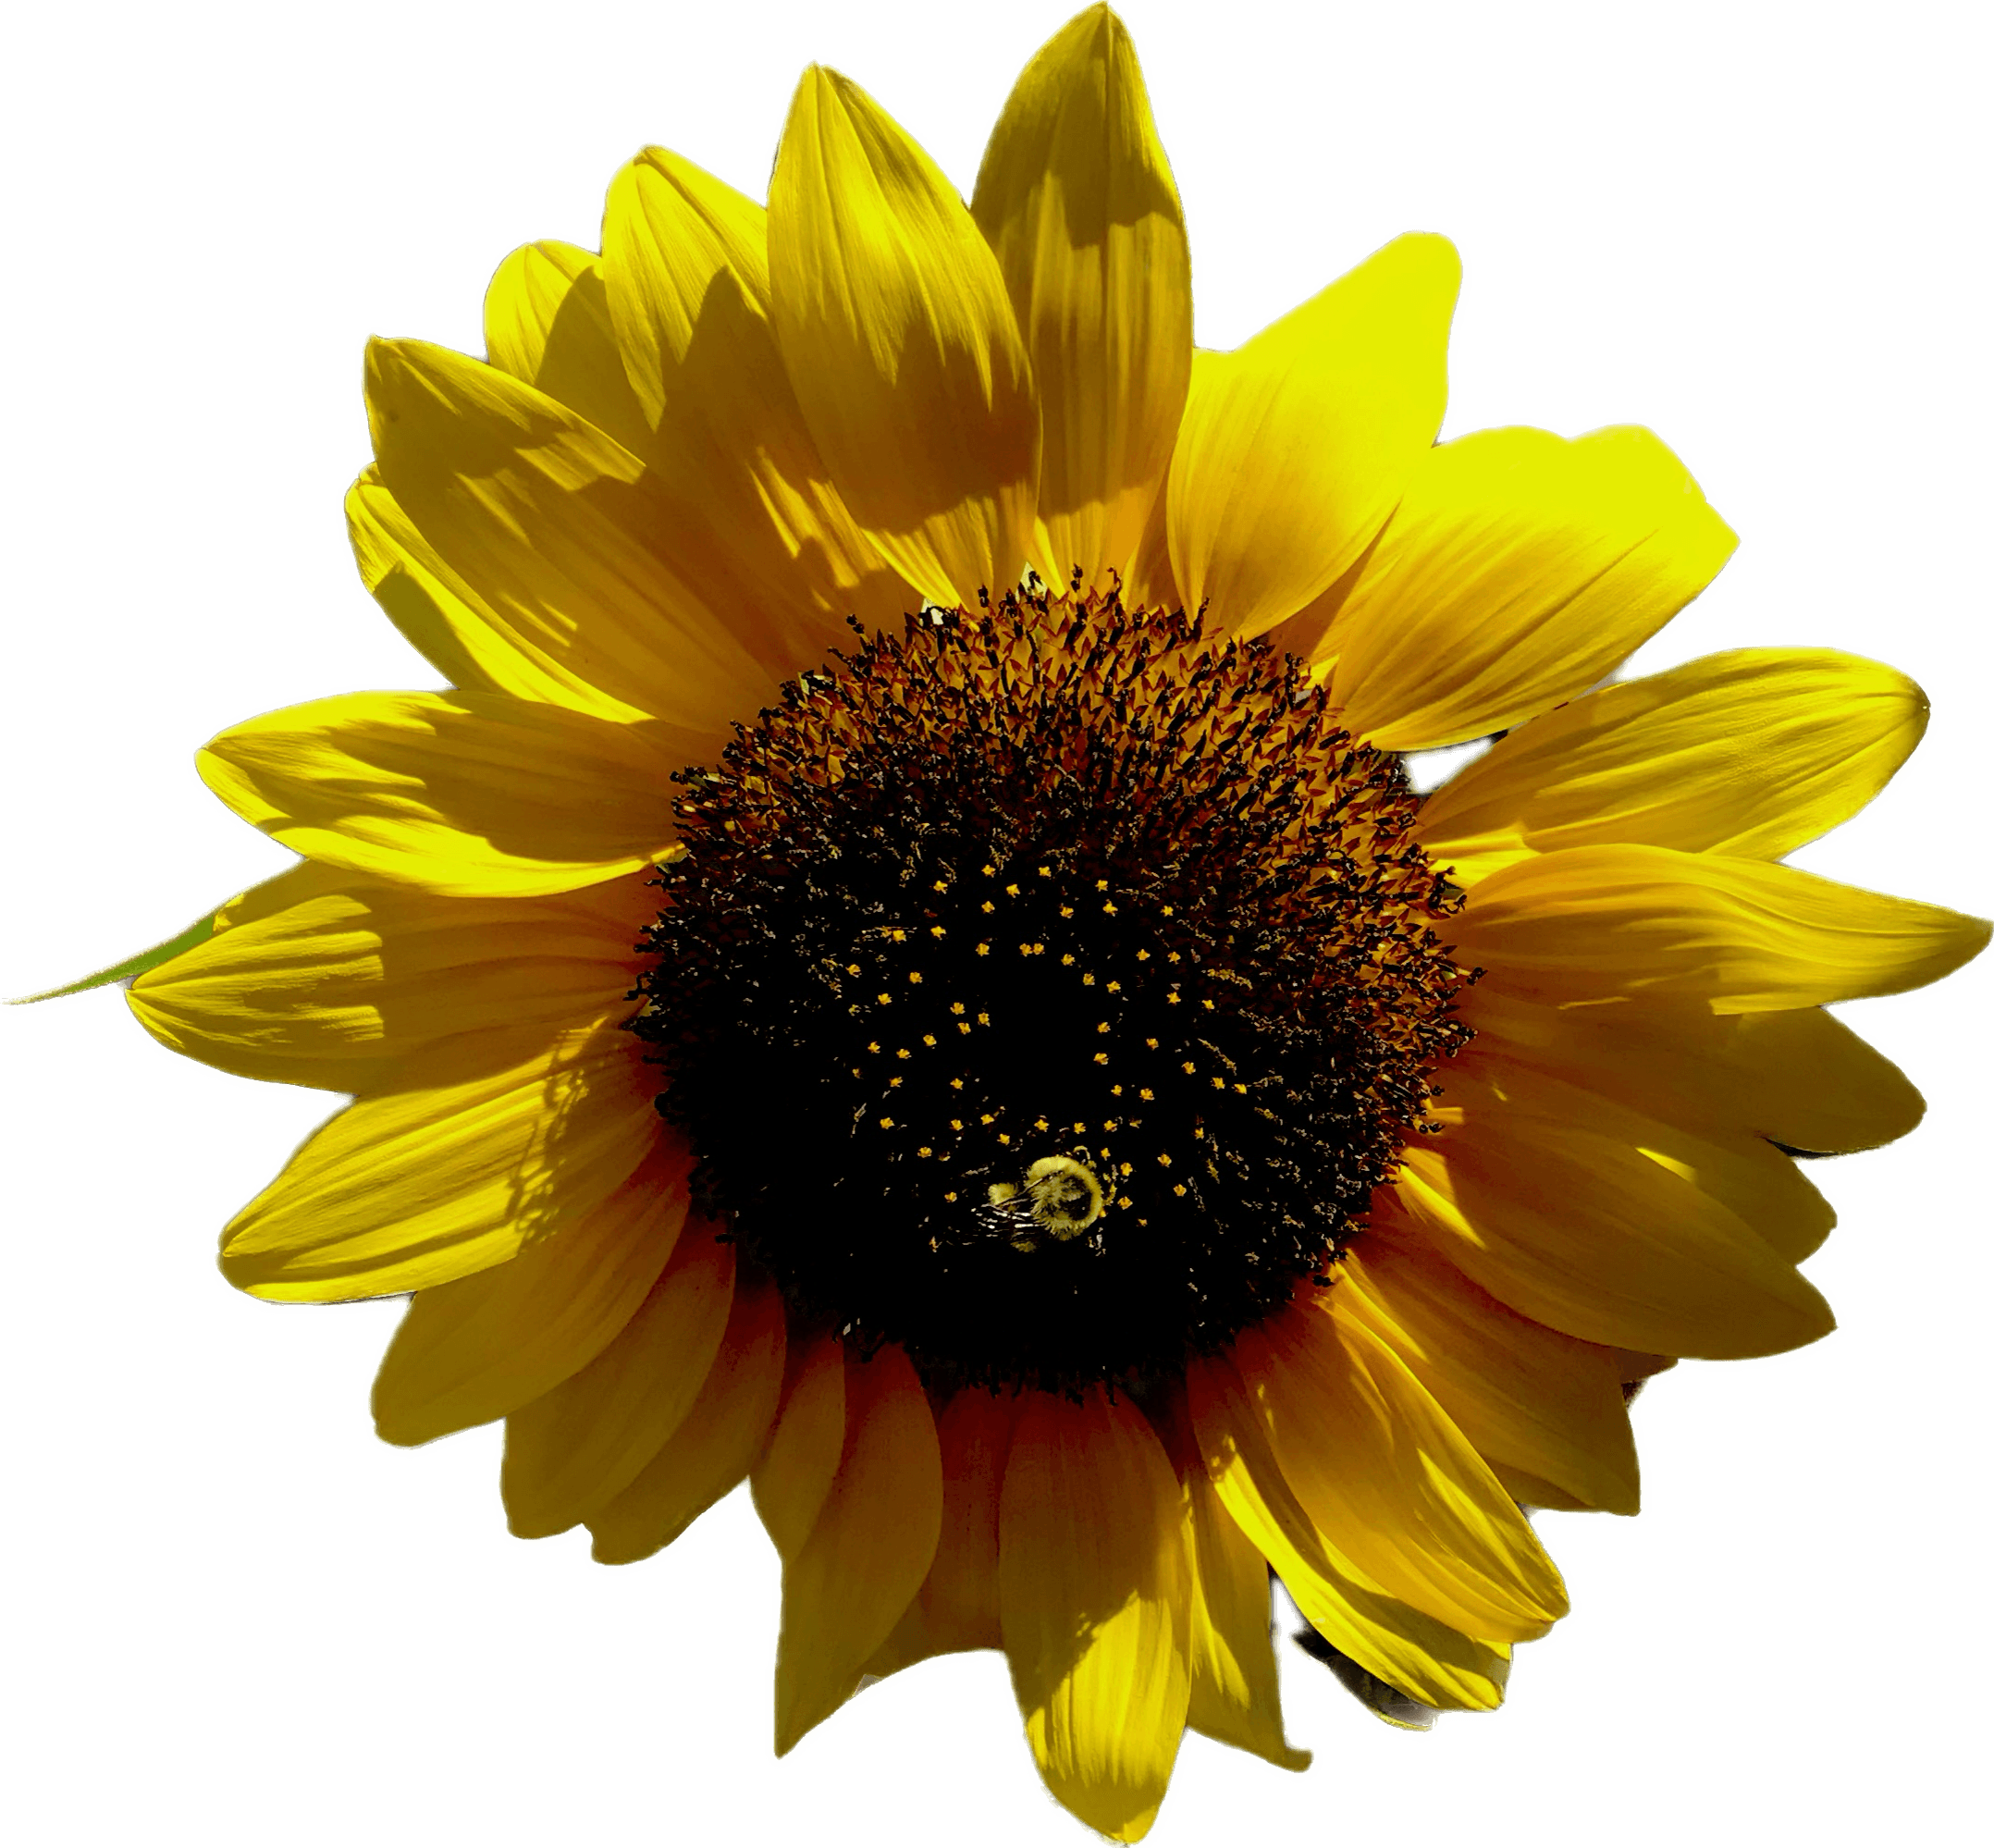 HueForge Sunflower  3d model